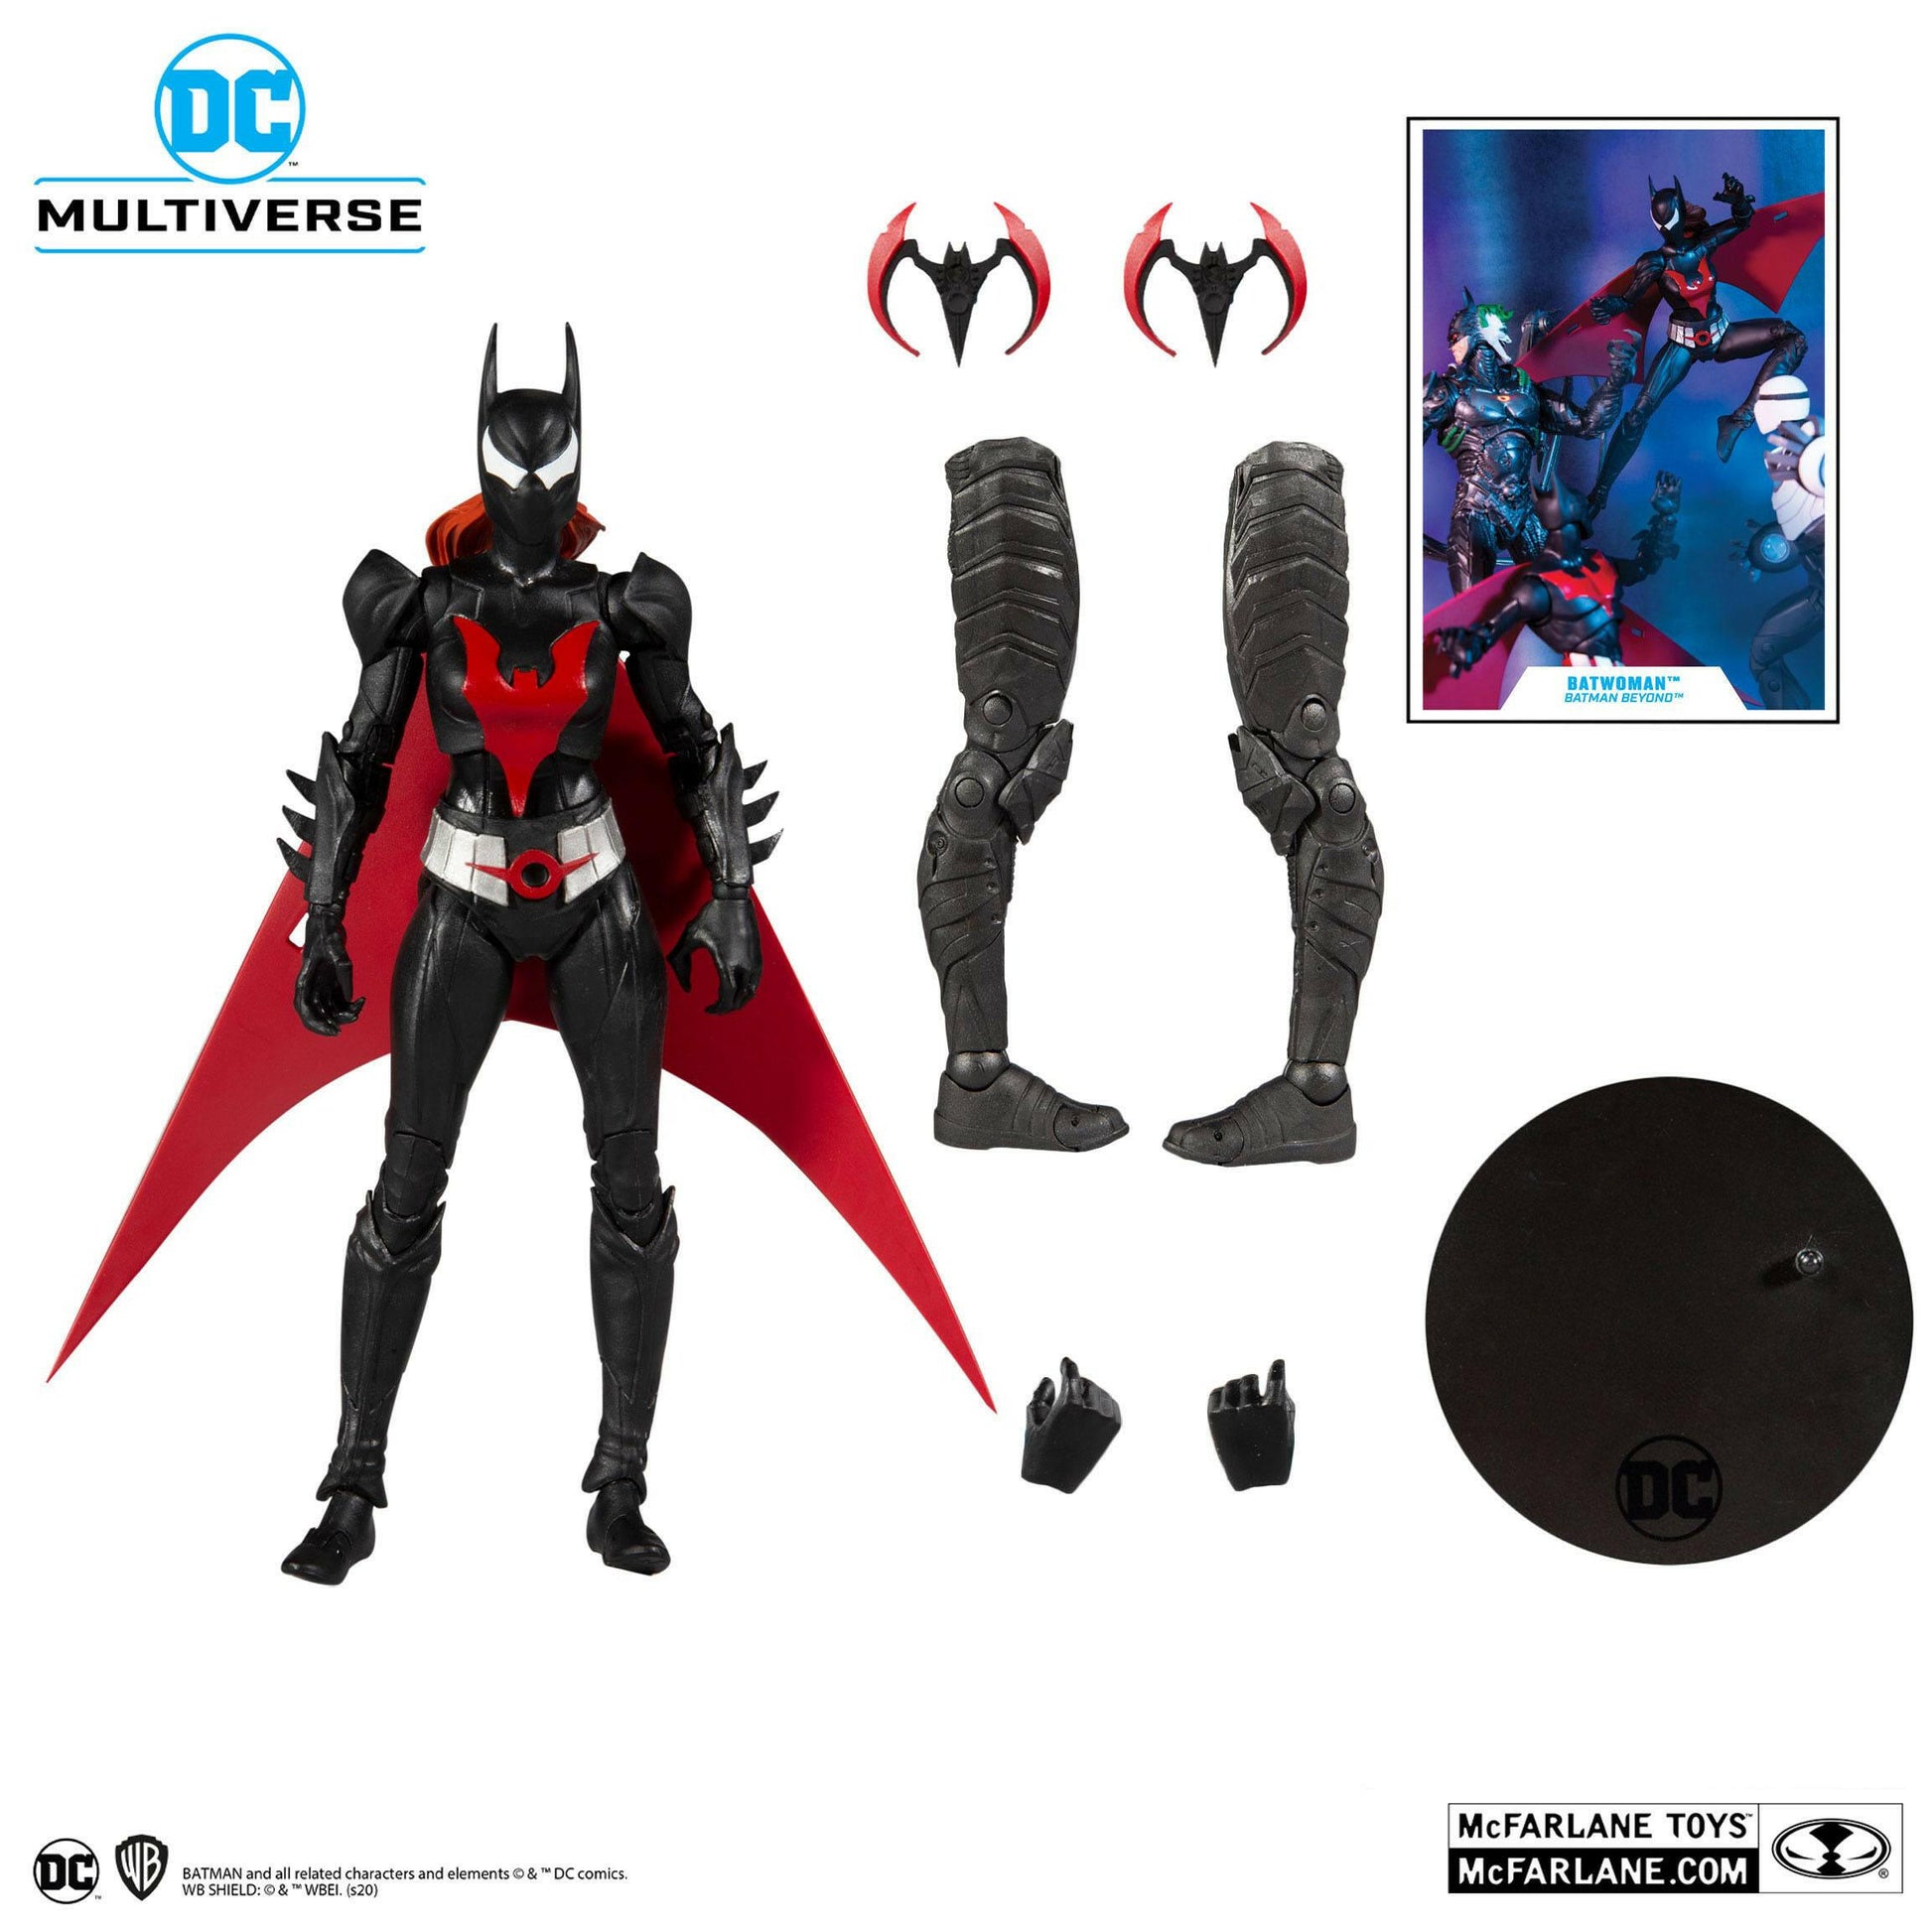 McFarlane DC Multiverse Build A Actionfigur Batwoman (Batman Beyond) 18cm McFarlane